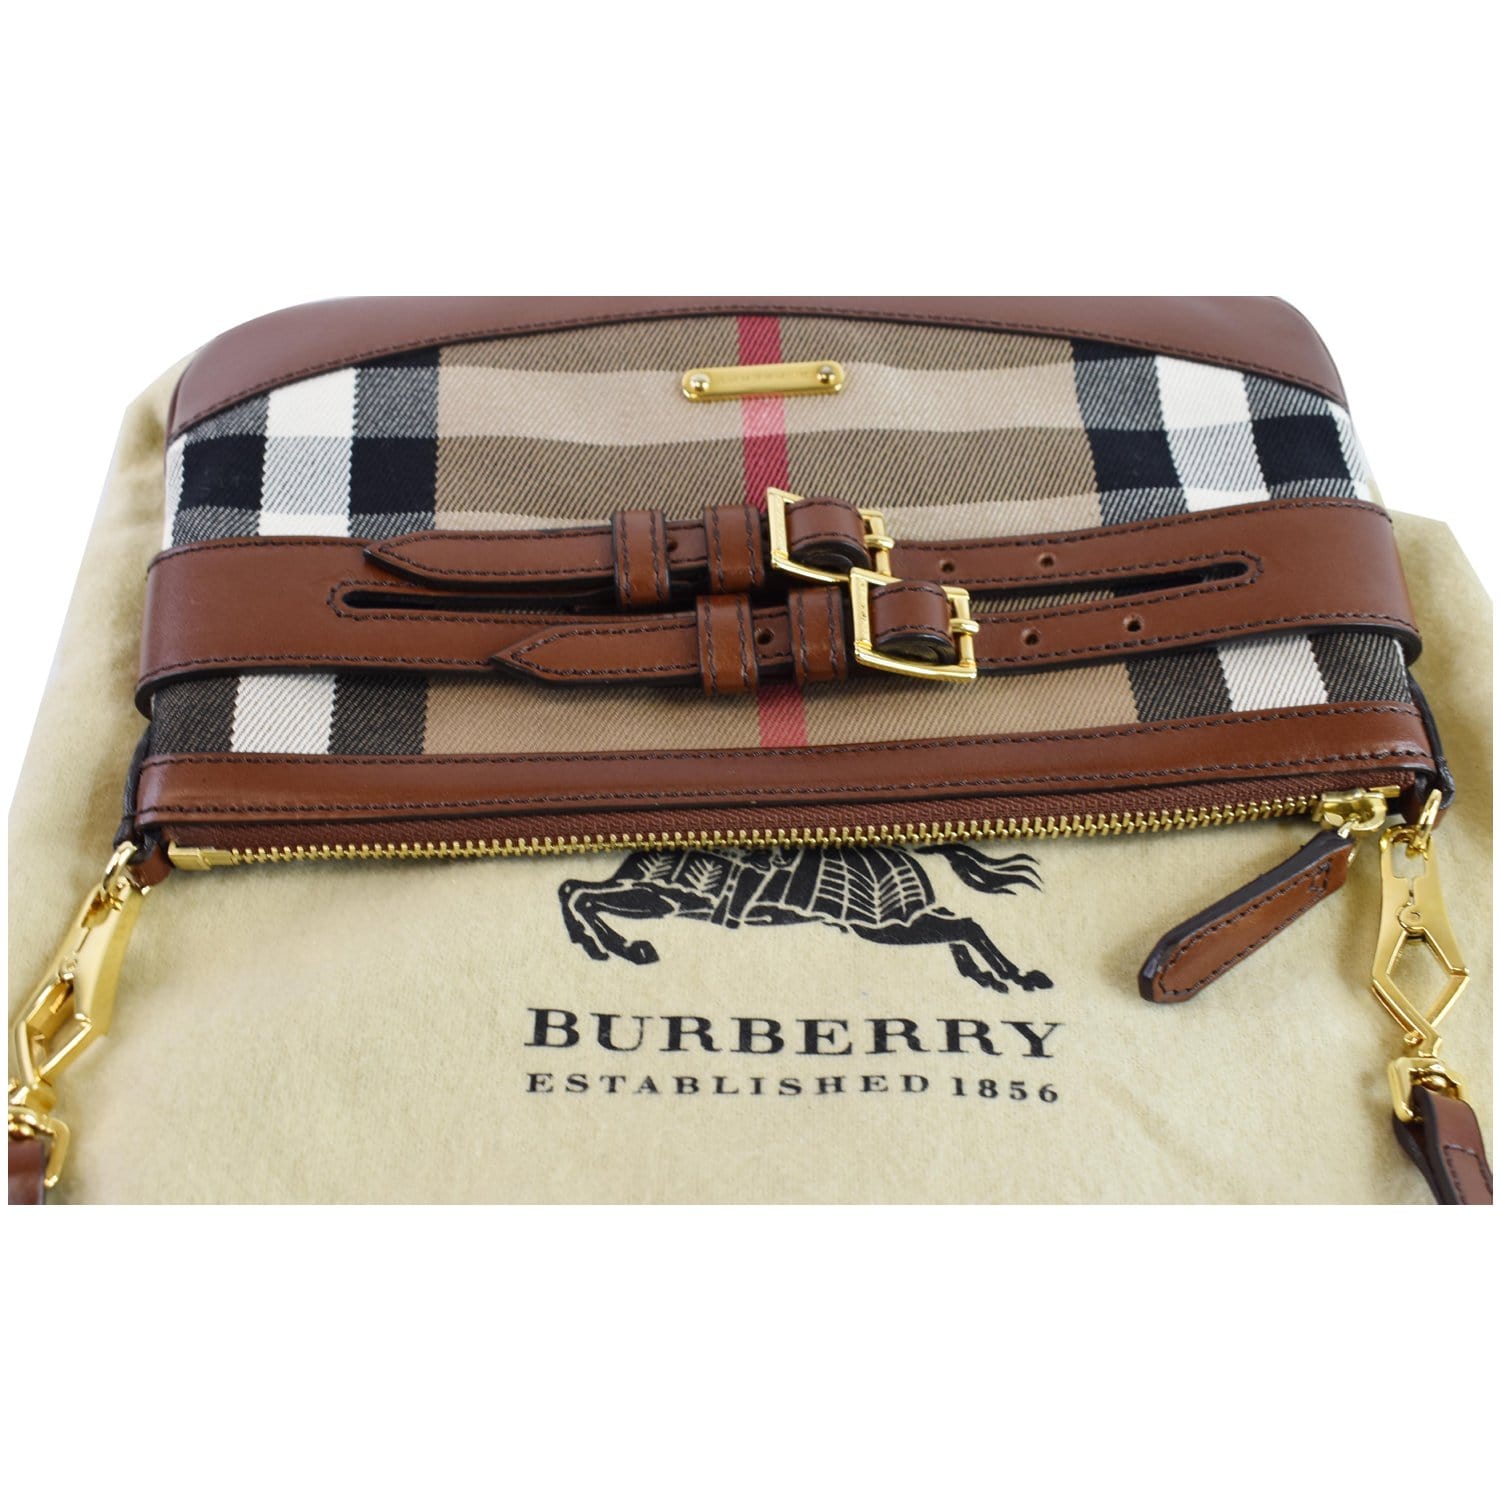 Used Burberry bridle peyton CROSSBODY / HANDBAG